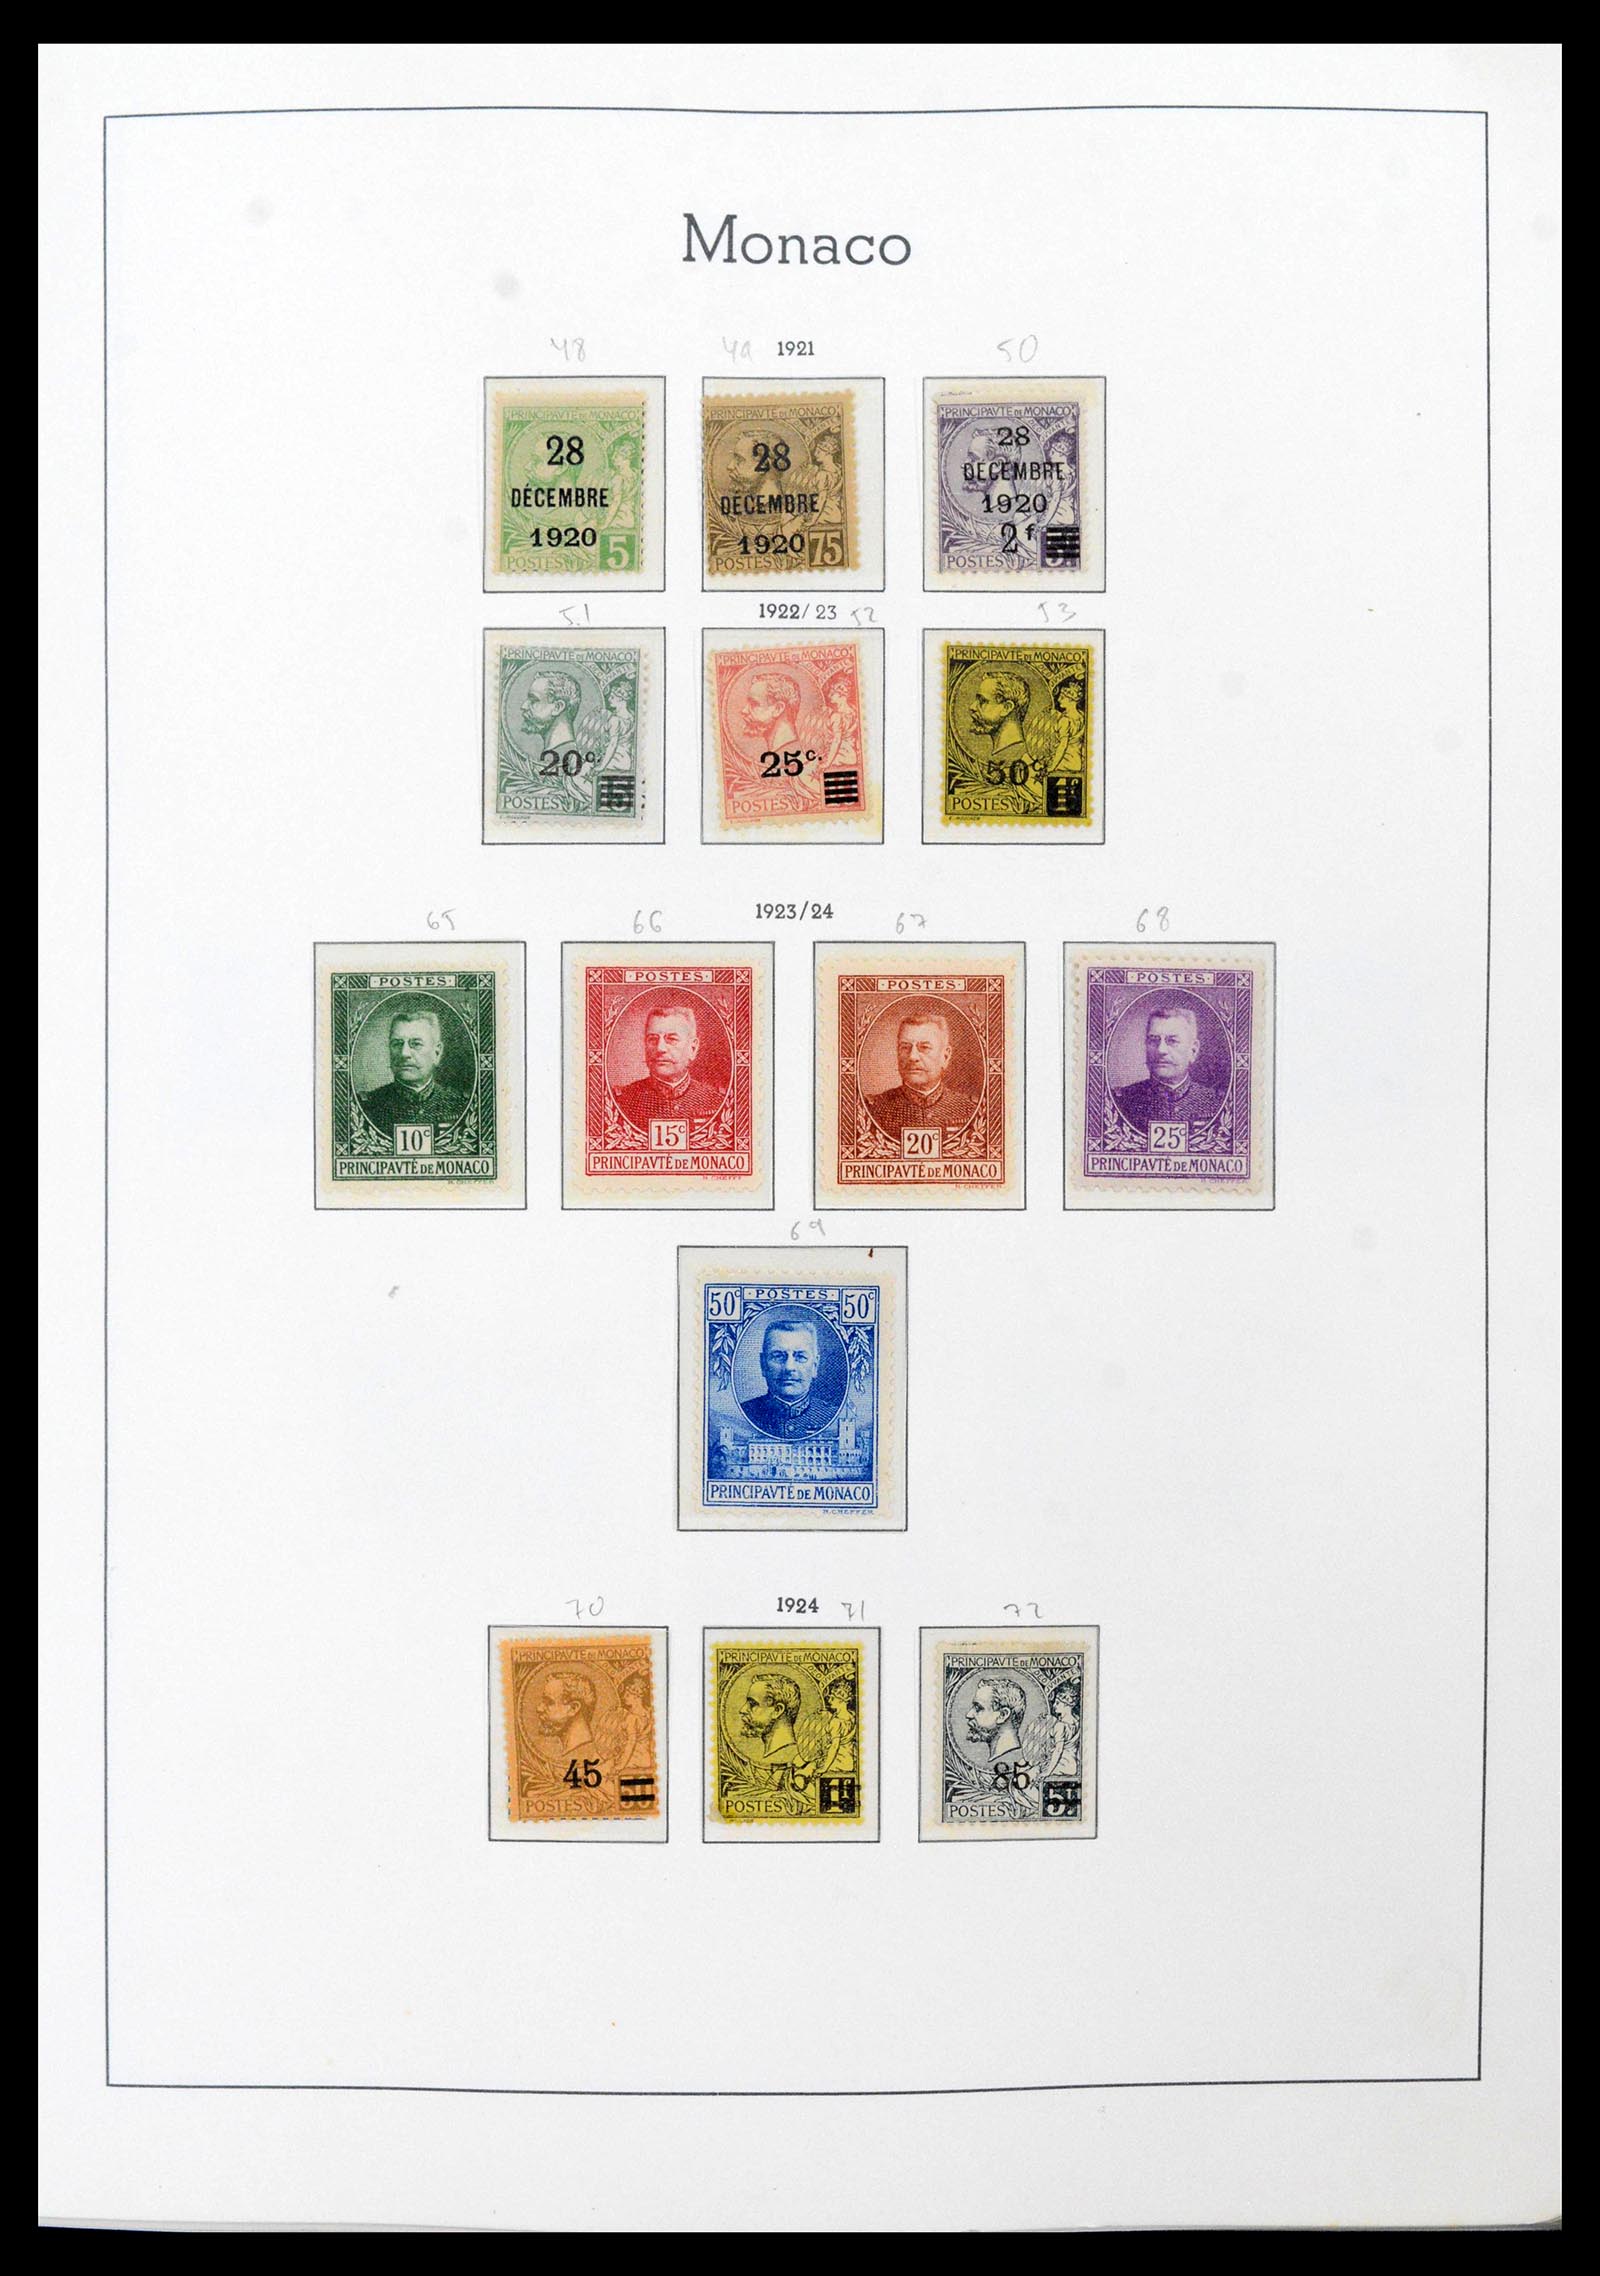 39250 0005 - Stamp collection 39250 Monaco 1885-1995.